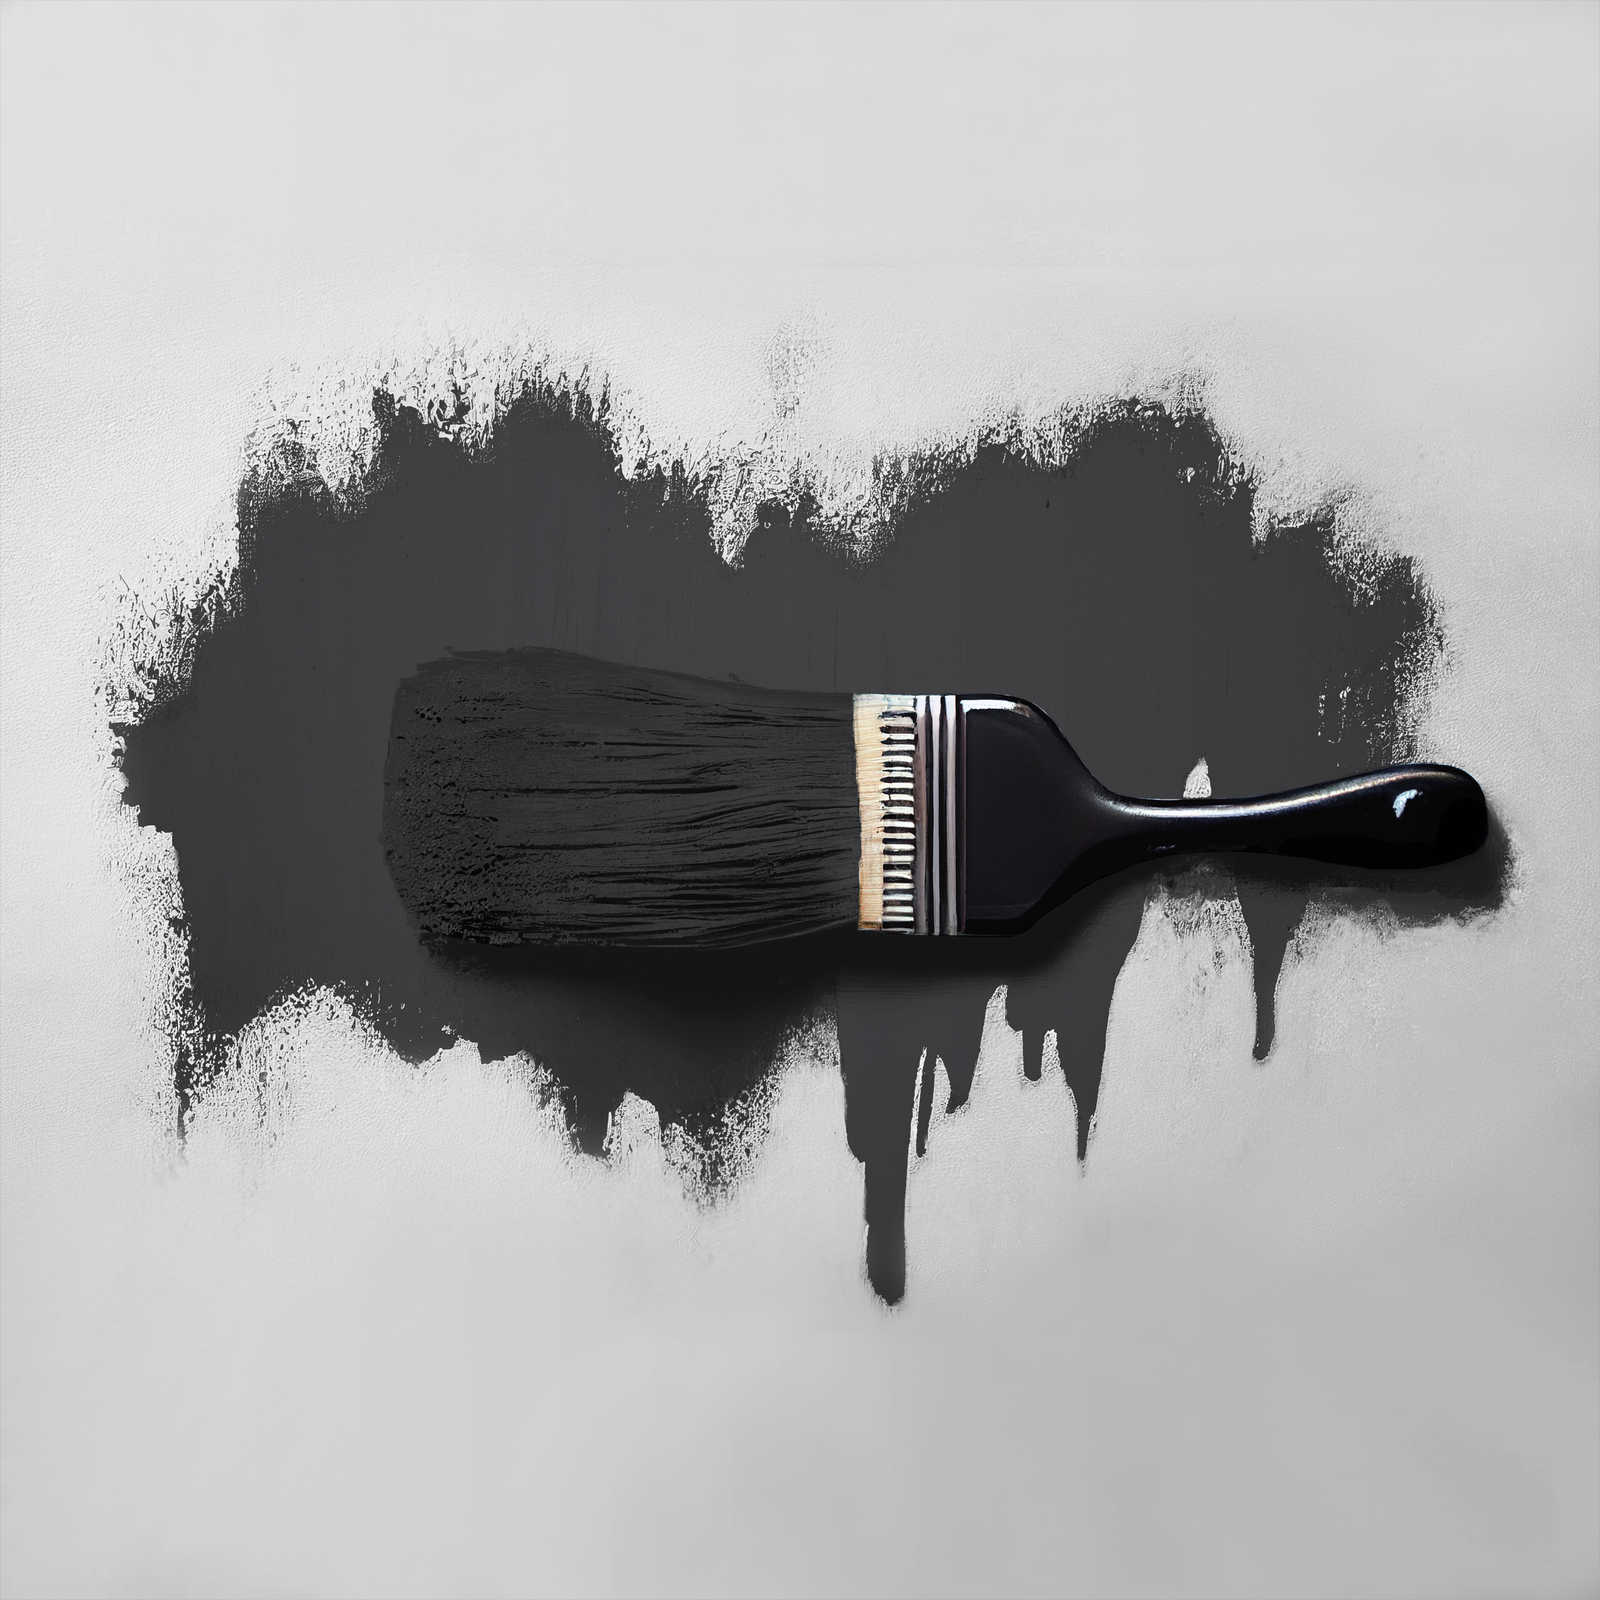             Pittura murale TCK1007 »Casual Caviar« in nero elegante – 2,5 litri
        